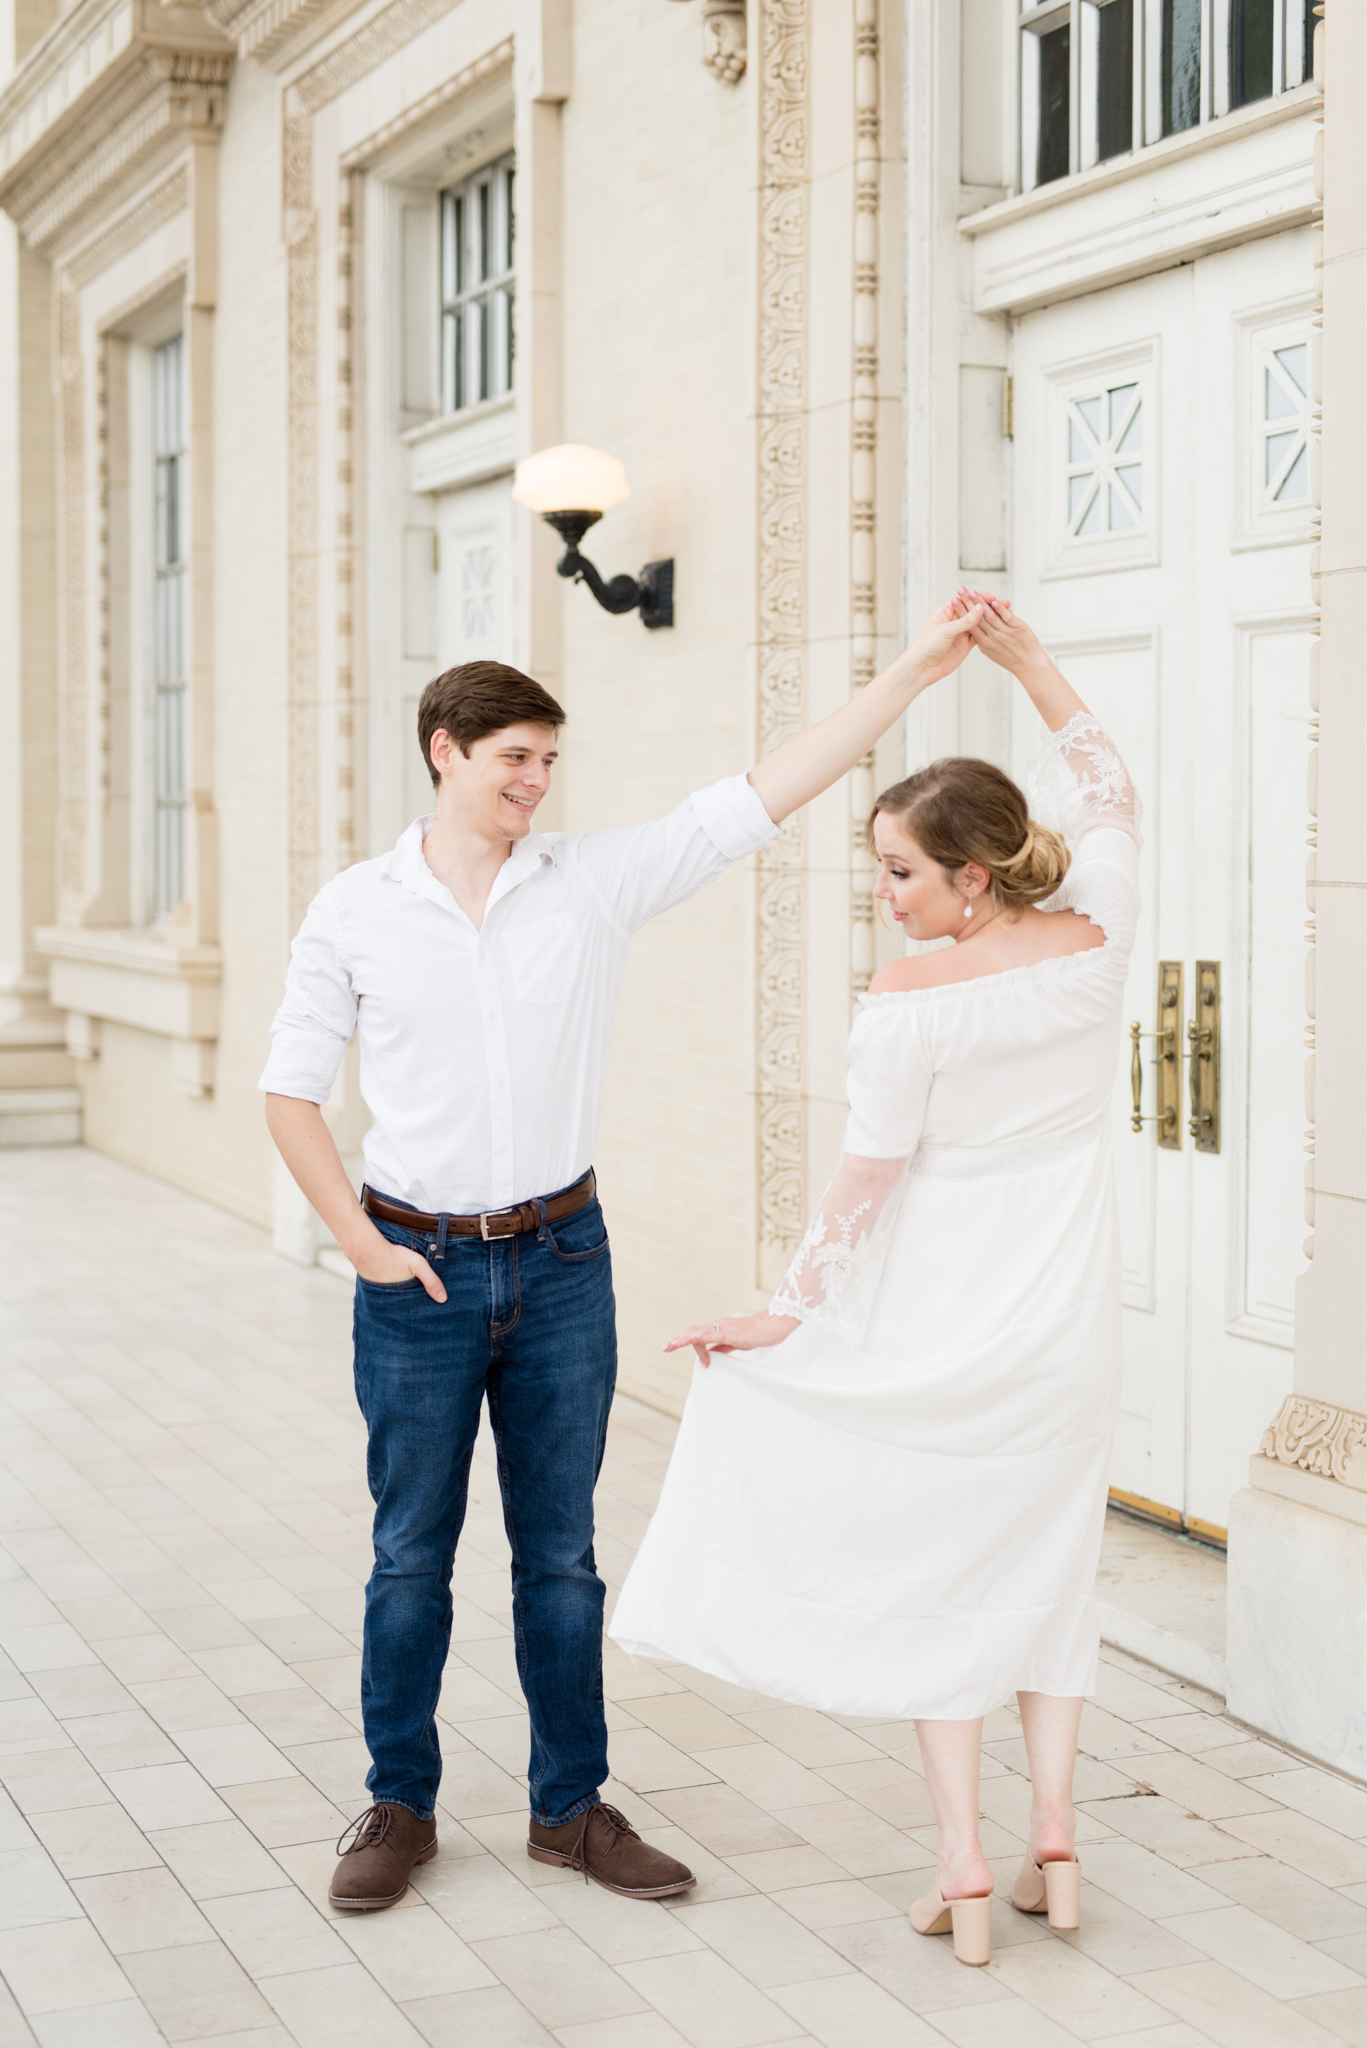 Man twirls fiance in front of white doors.